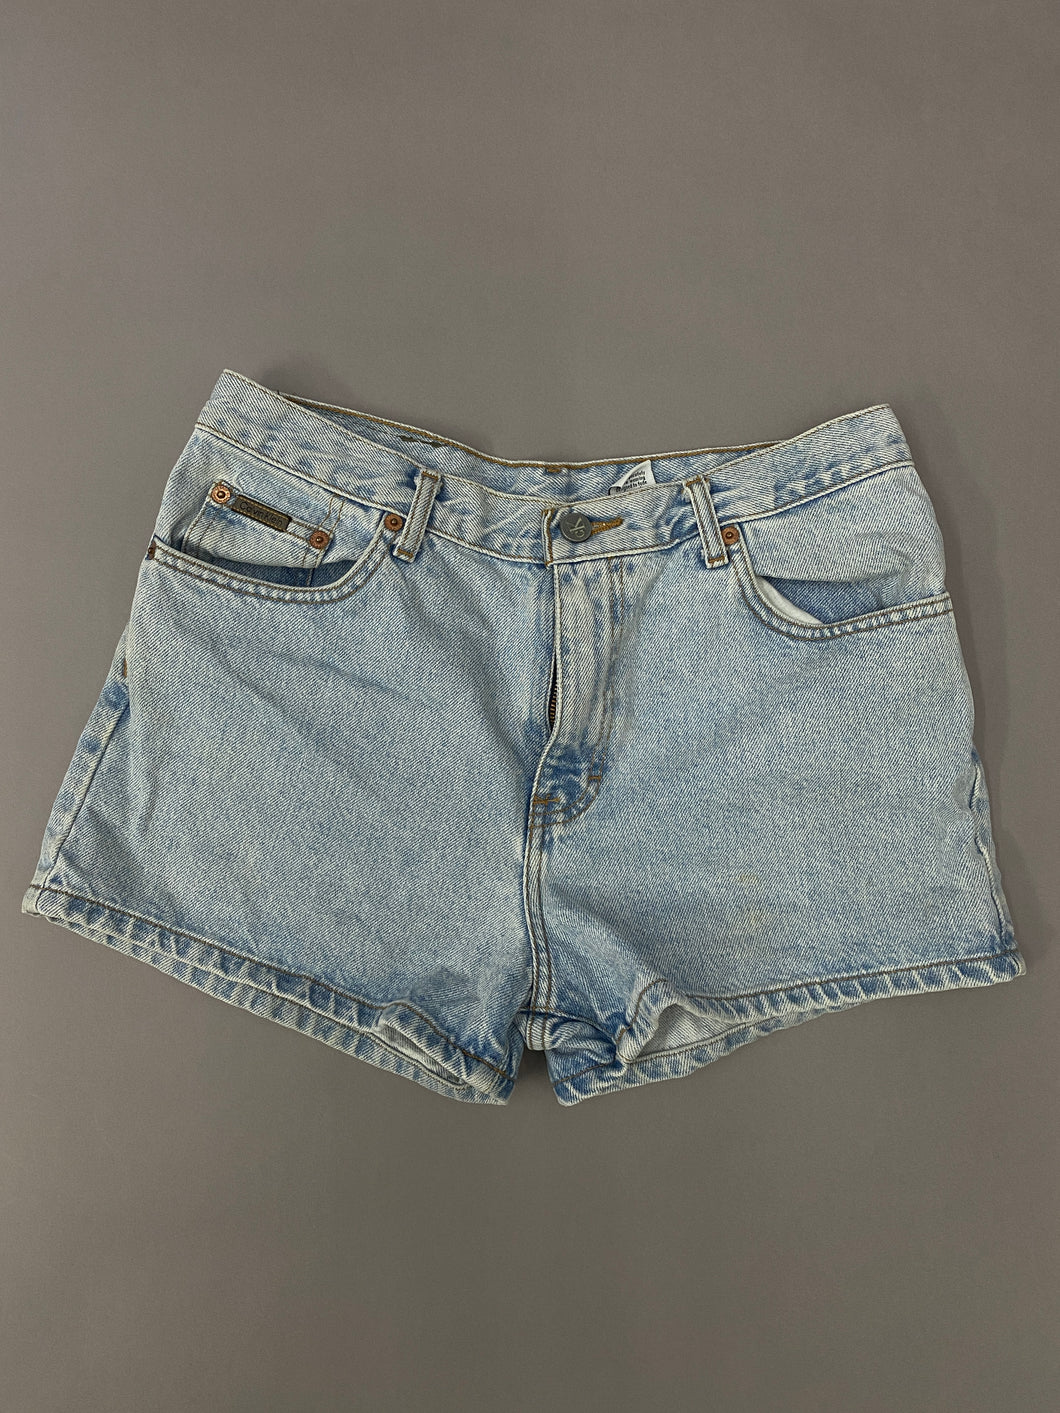 Calvin Klein Vintage Shorts Size 7 – Ropa Chidx